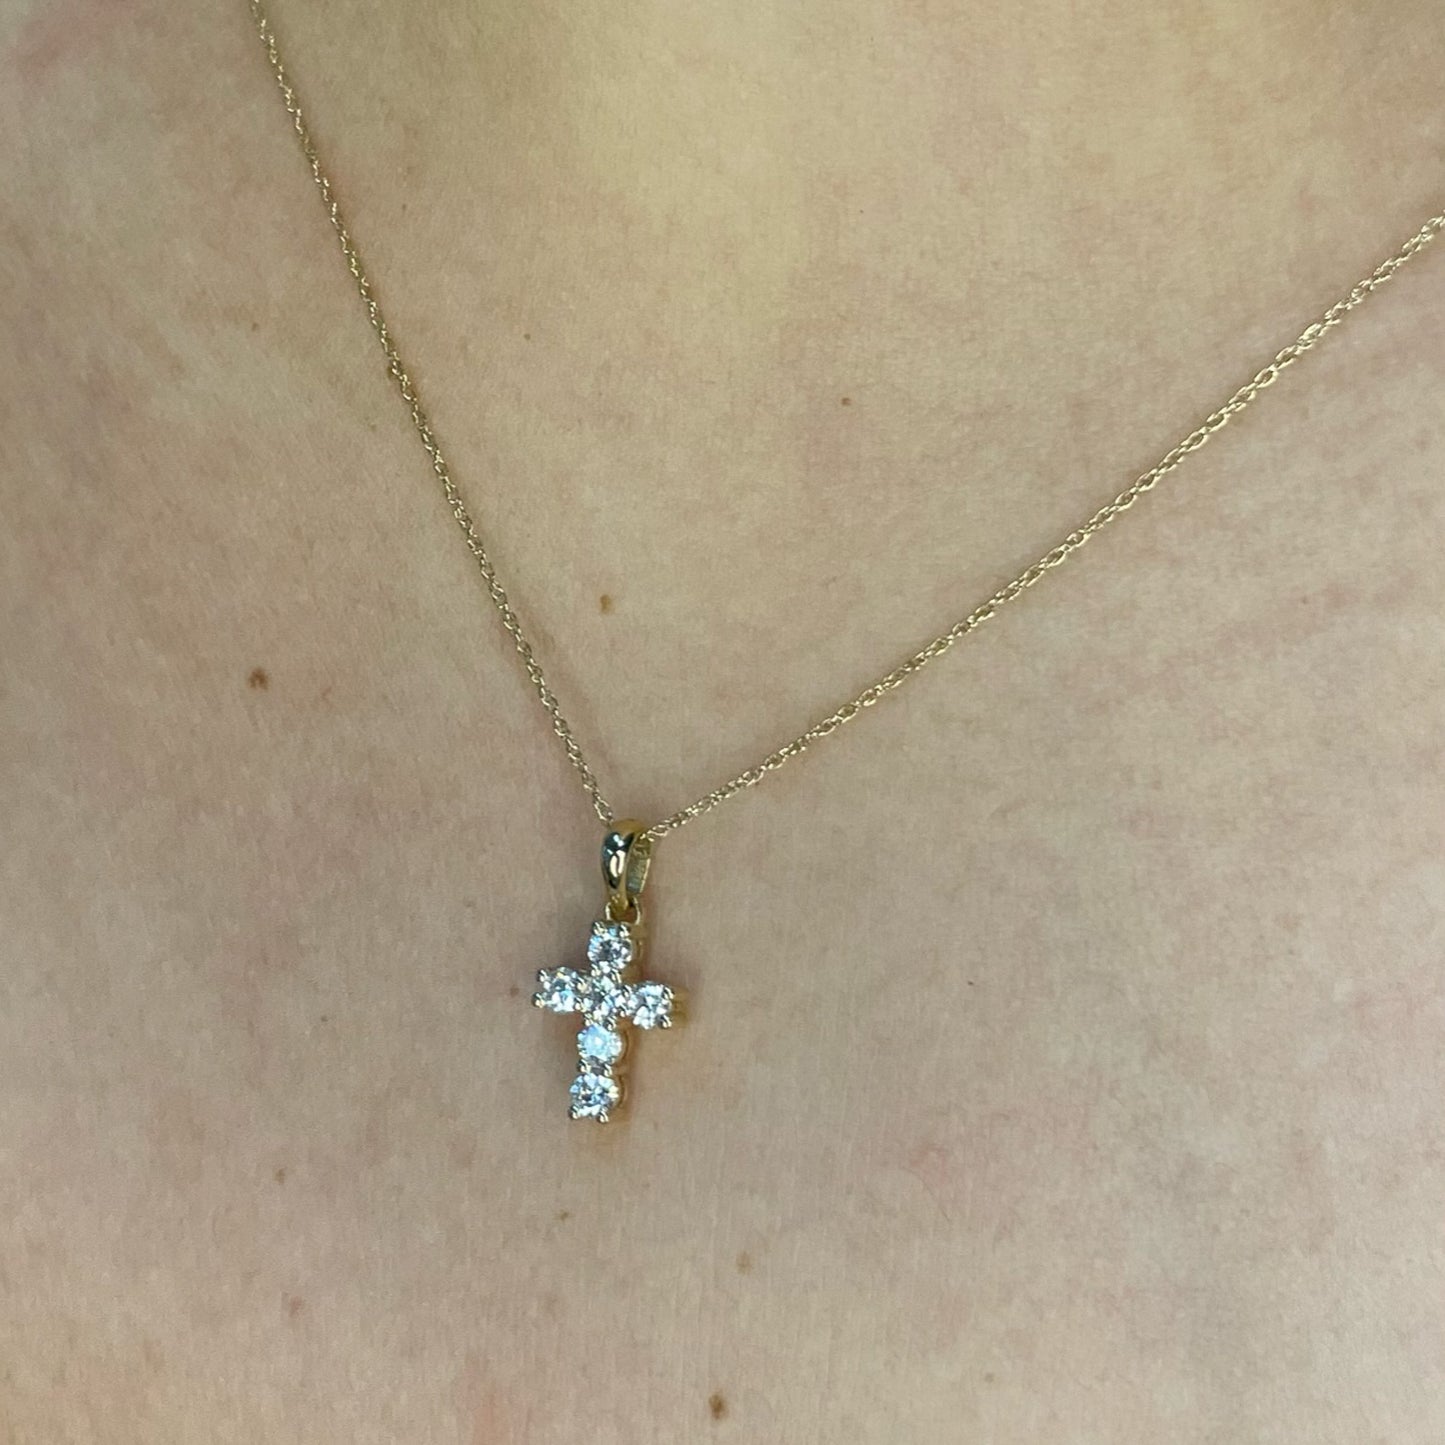 Small Diamond Cross Necklace - 0.35 CT